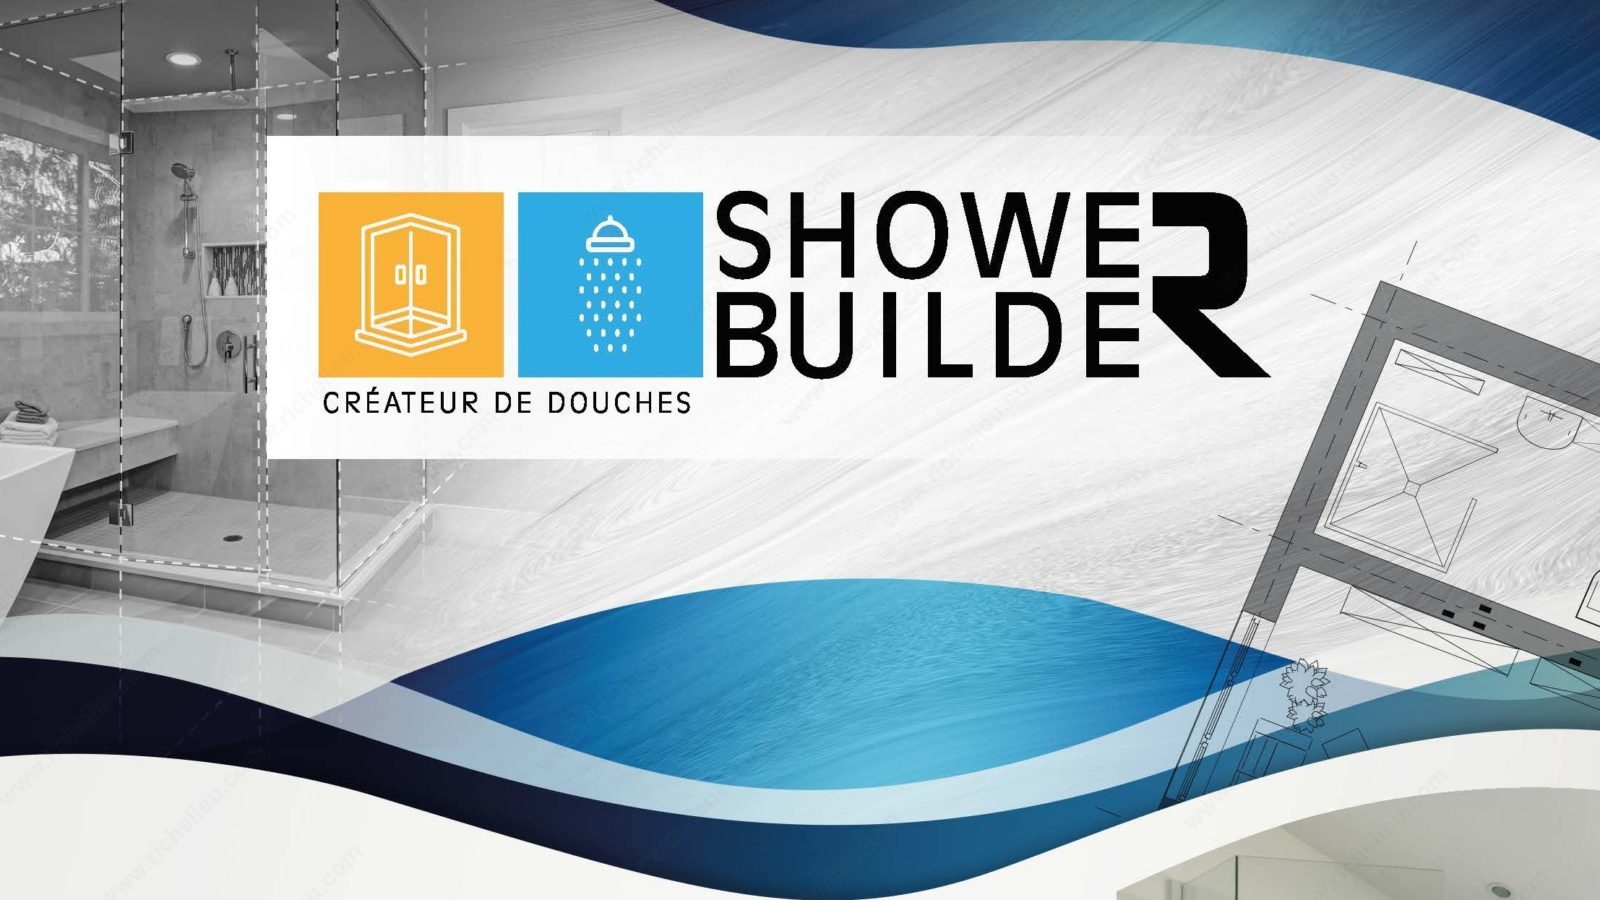 Richelieu presenta su programa Shower Builder